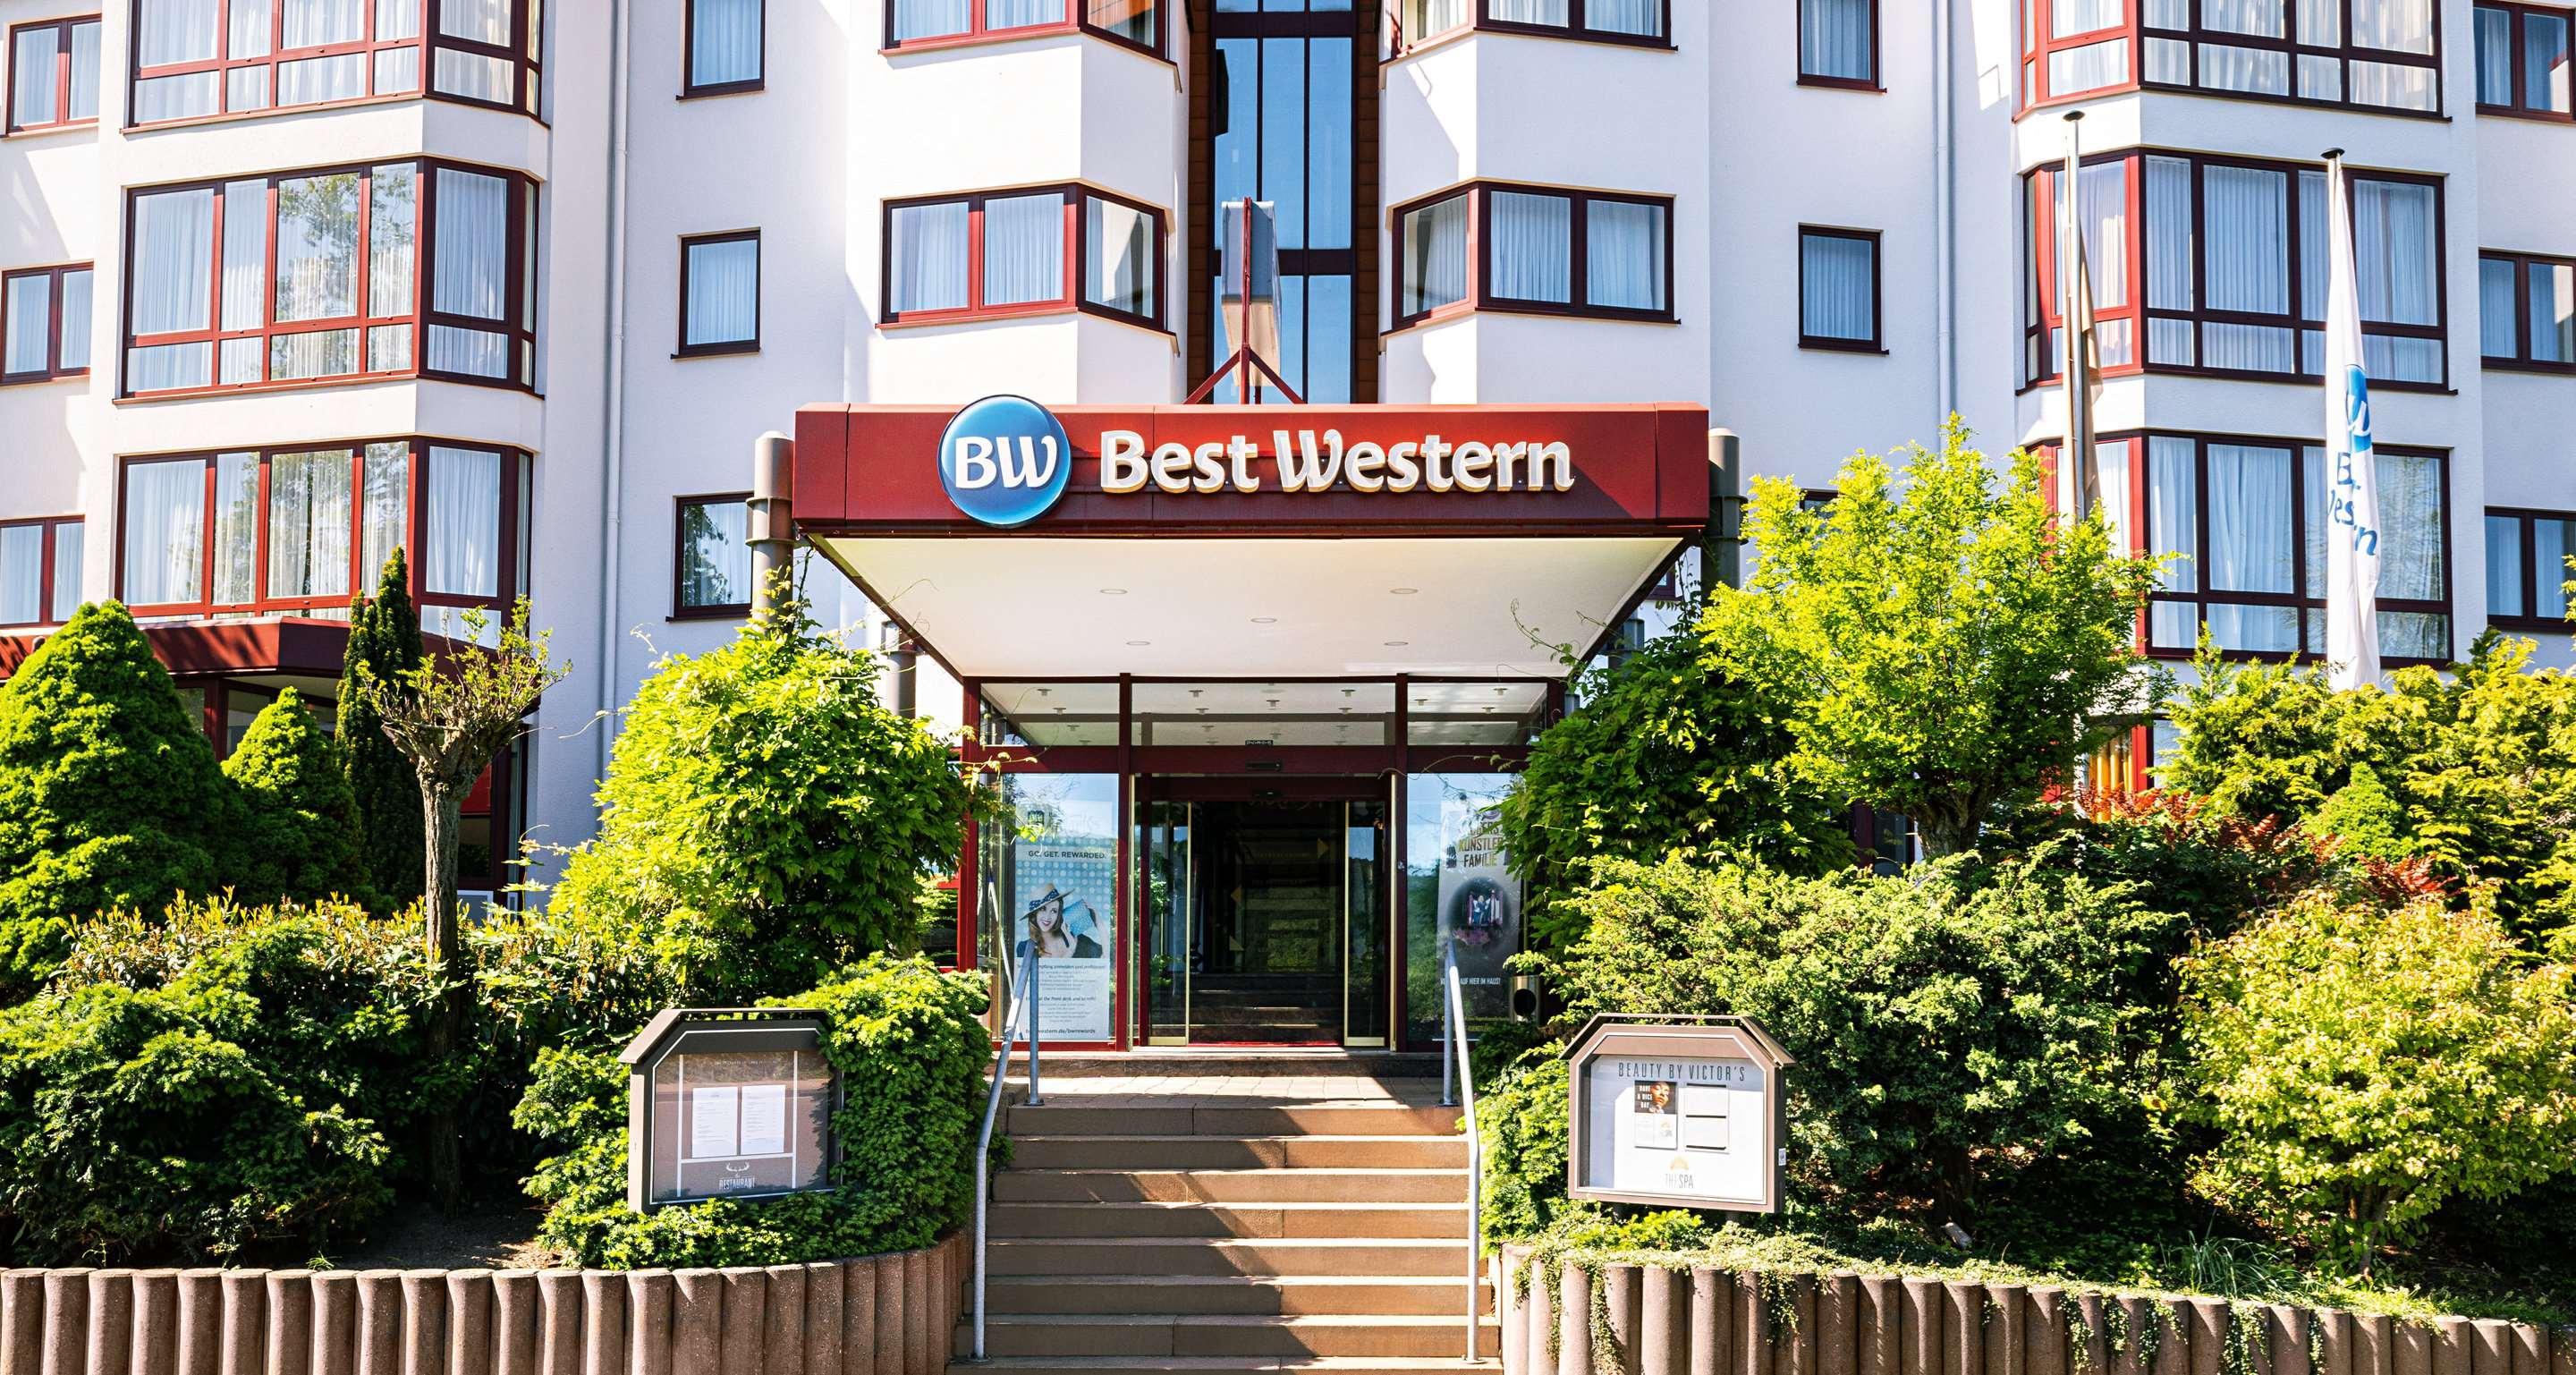 Best Western Victor'S Residenz-Hotel Rodenhof Saarbrücken Zewnętrze zdjęcie